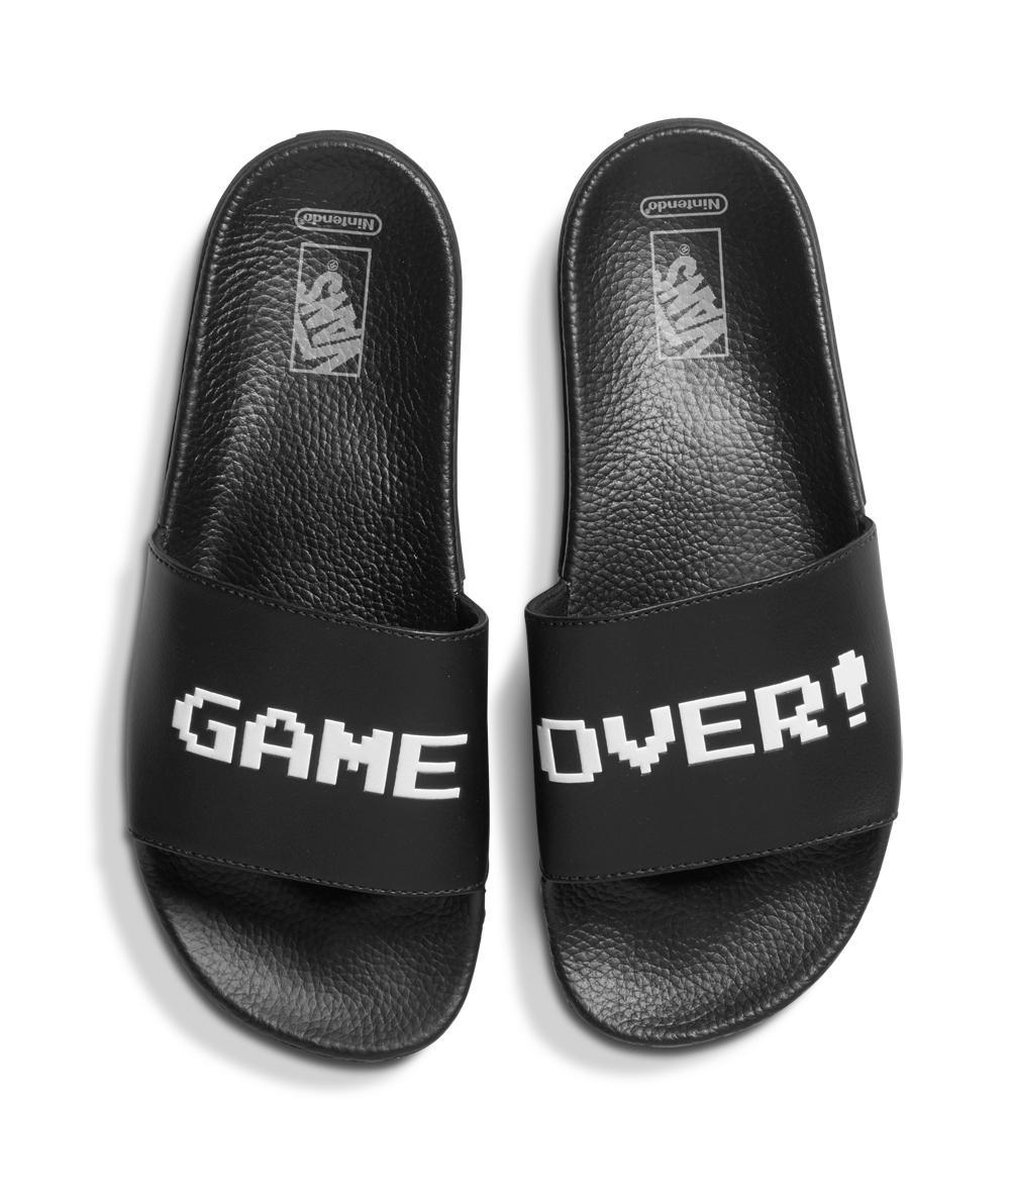 Schoenen Herenschoenen sloffen House Shoes dia's cadeau Laten we vintage videogame spelen over menu Gamer Heren Slippers 